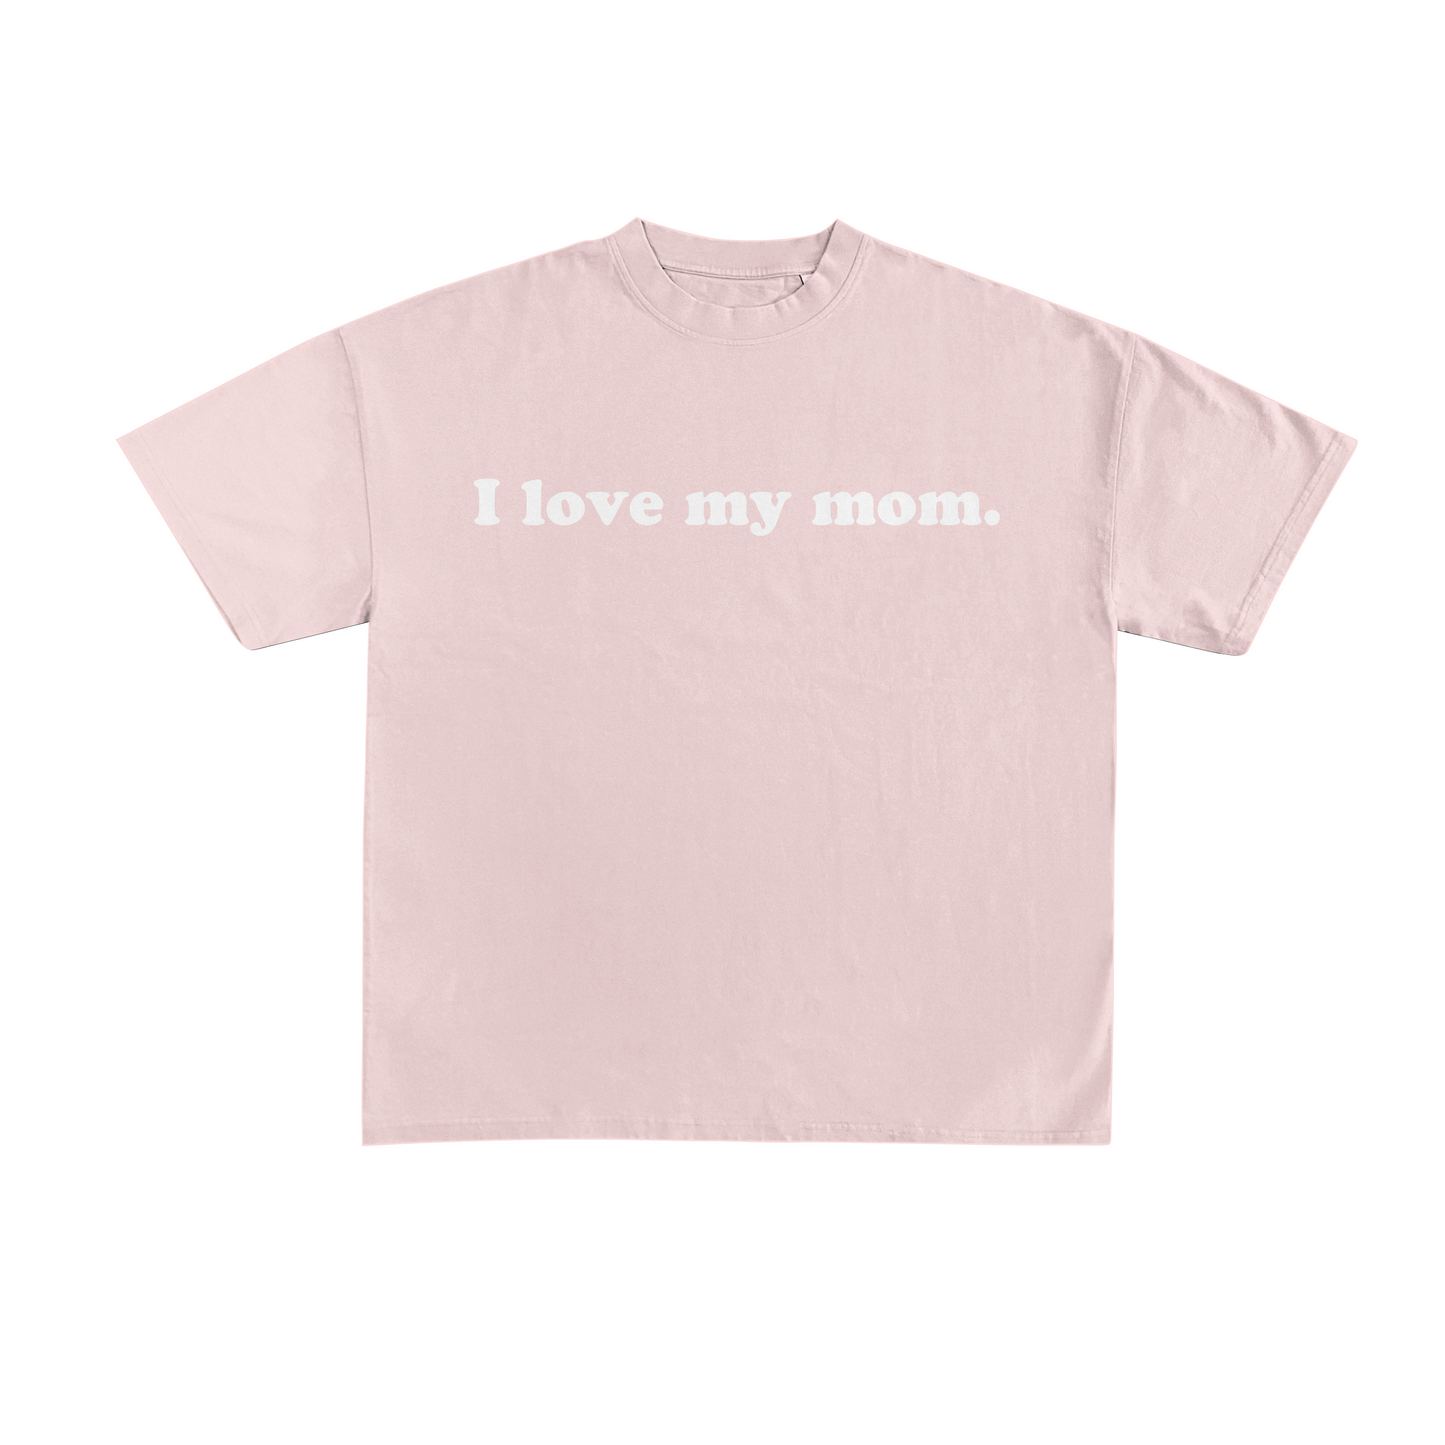 "I LOVE MY MOM" PREMIUM PINK TEE